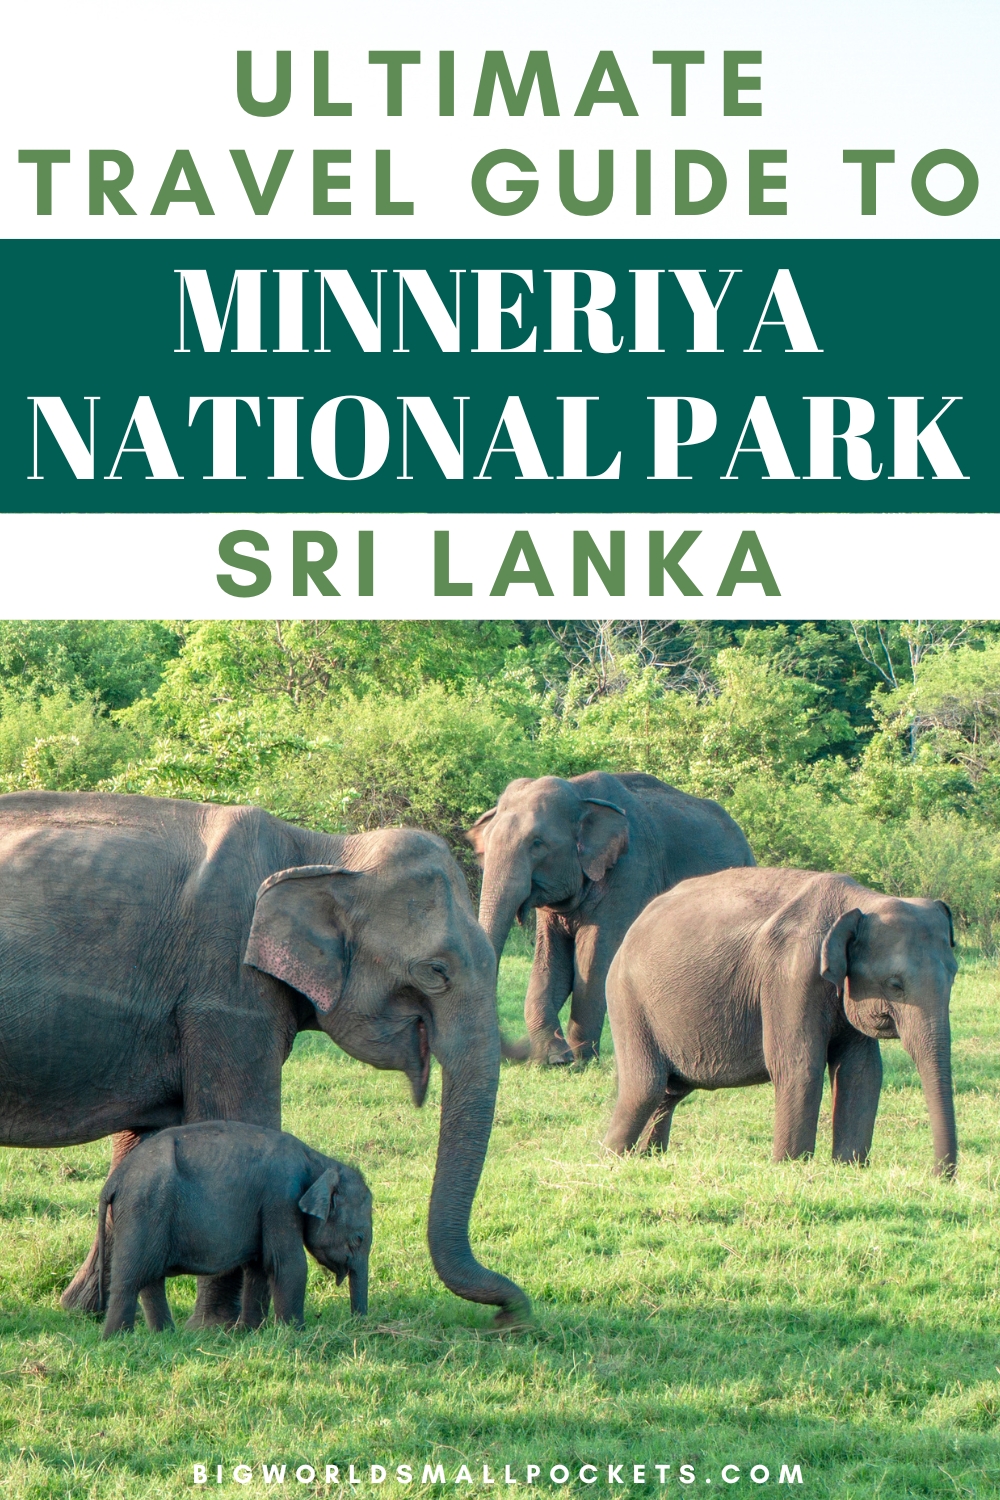 Complete Travel Guide to Minneriya National Park, Sri Lanka